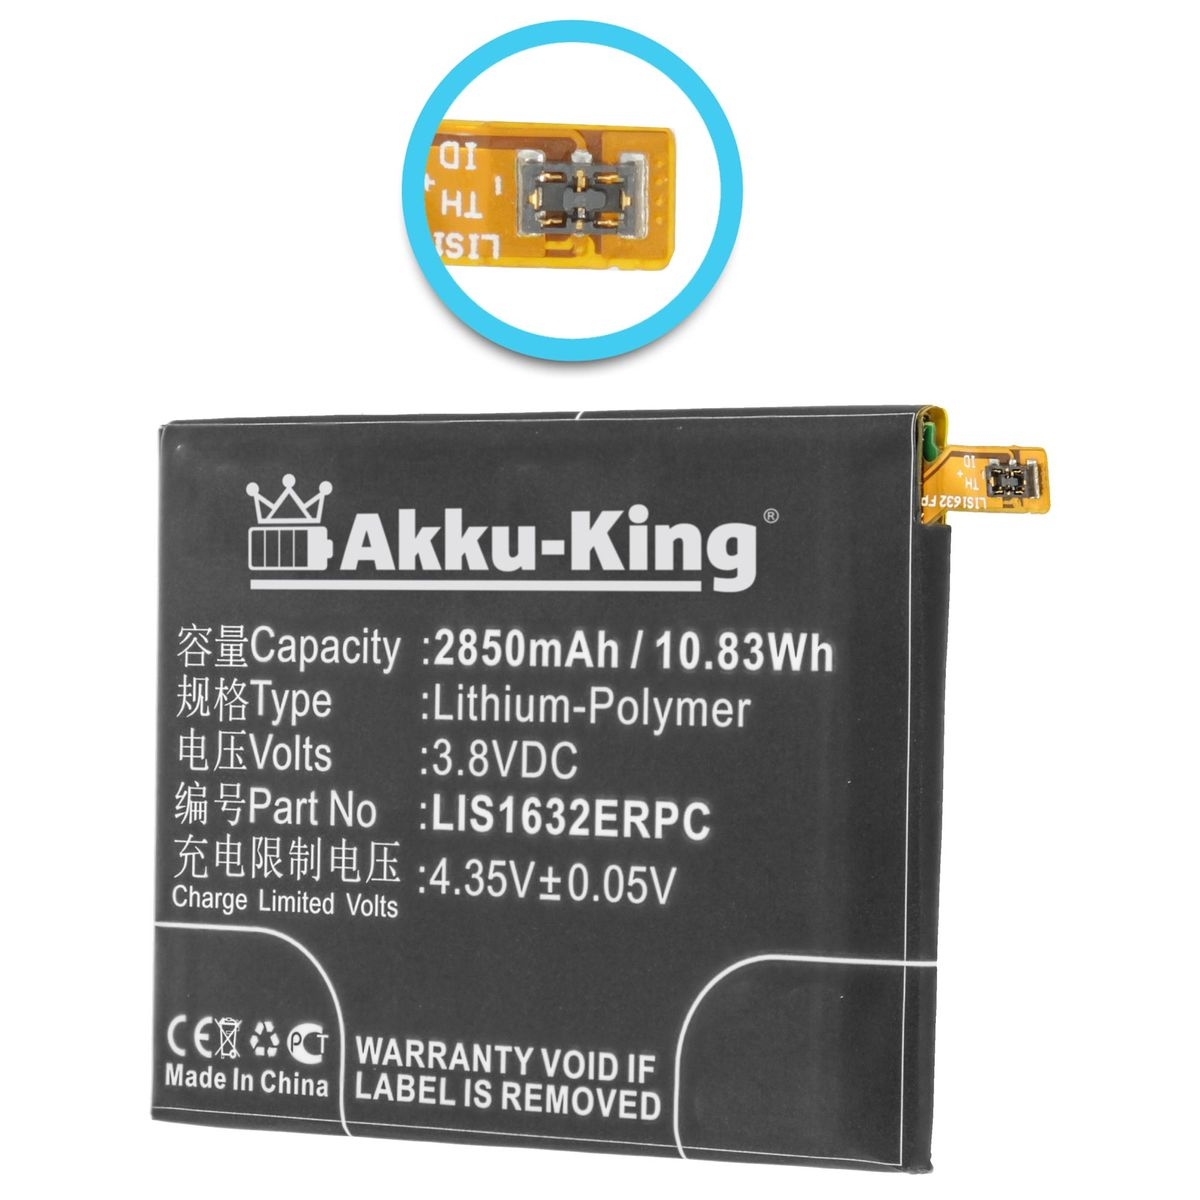 mit Handy-Akku, 2850mAh Sony Akku Li-Polymer 3.8 kompatibel LIS1632ERPC Volt, AKKU-KING